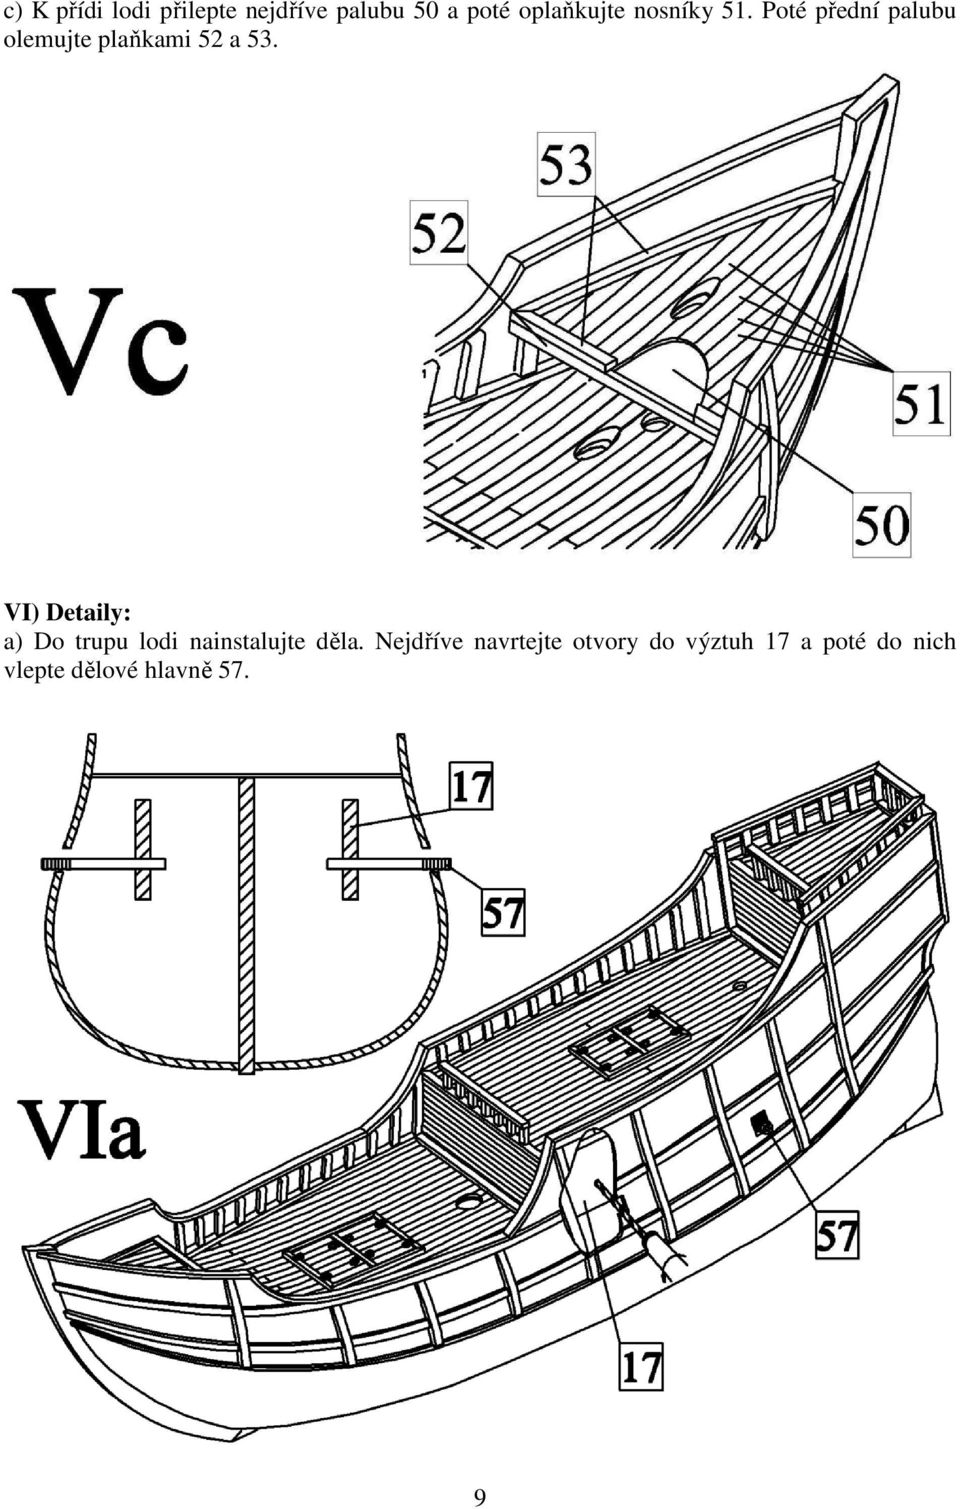 VI) Detaily: a) Do trupu lodi nainstalujte děla.